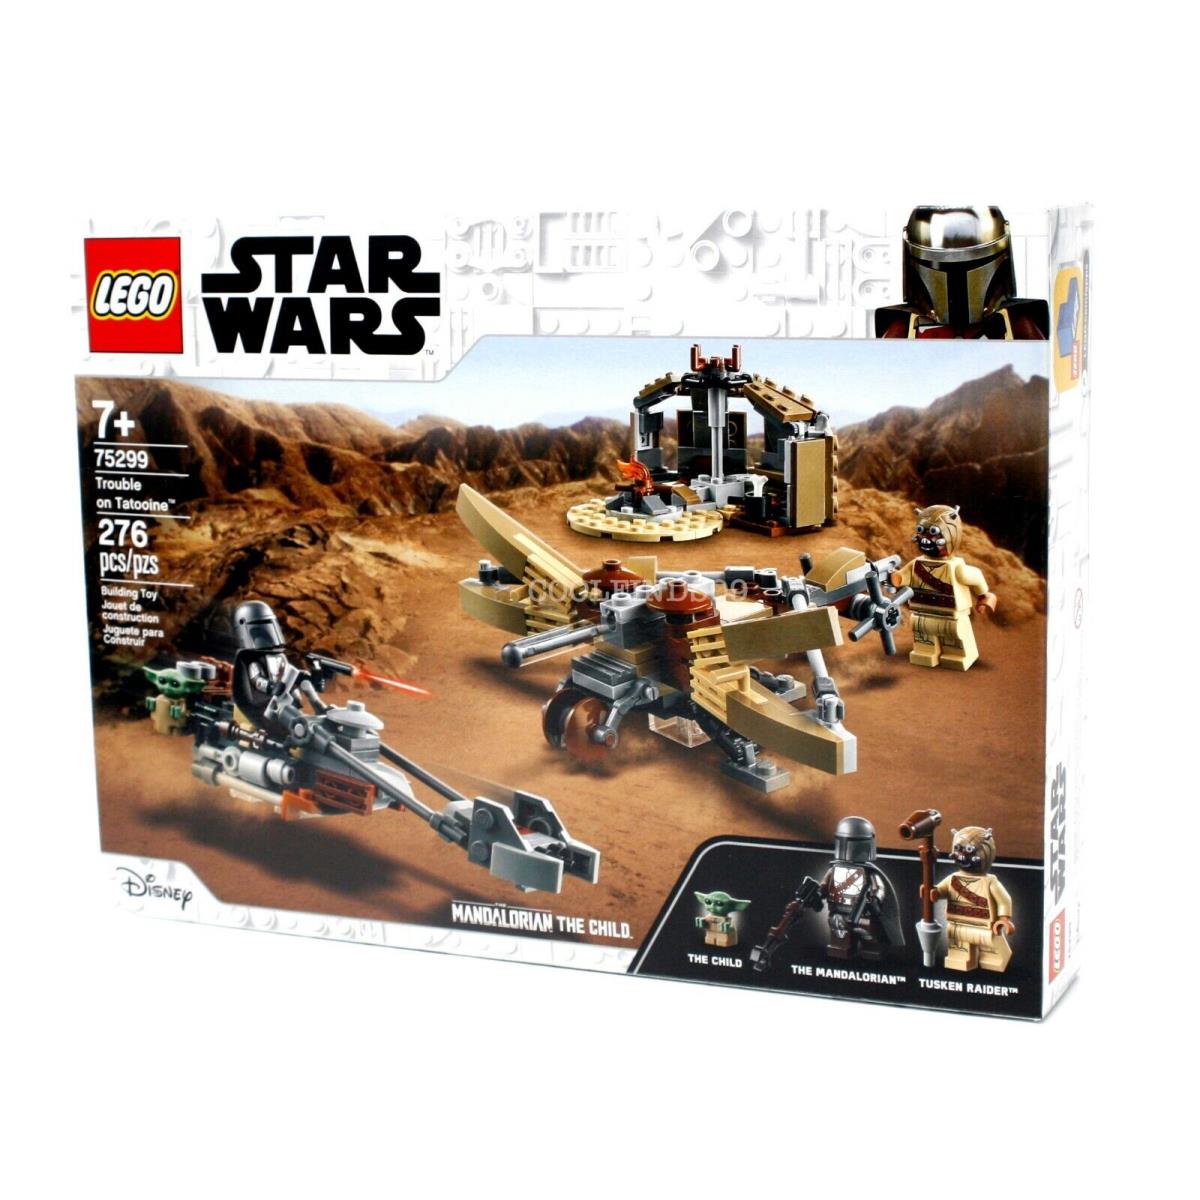 Lego Star Wars 75299 Trouble on Tatooine The Mandalorian The Child Tusken Raider